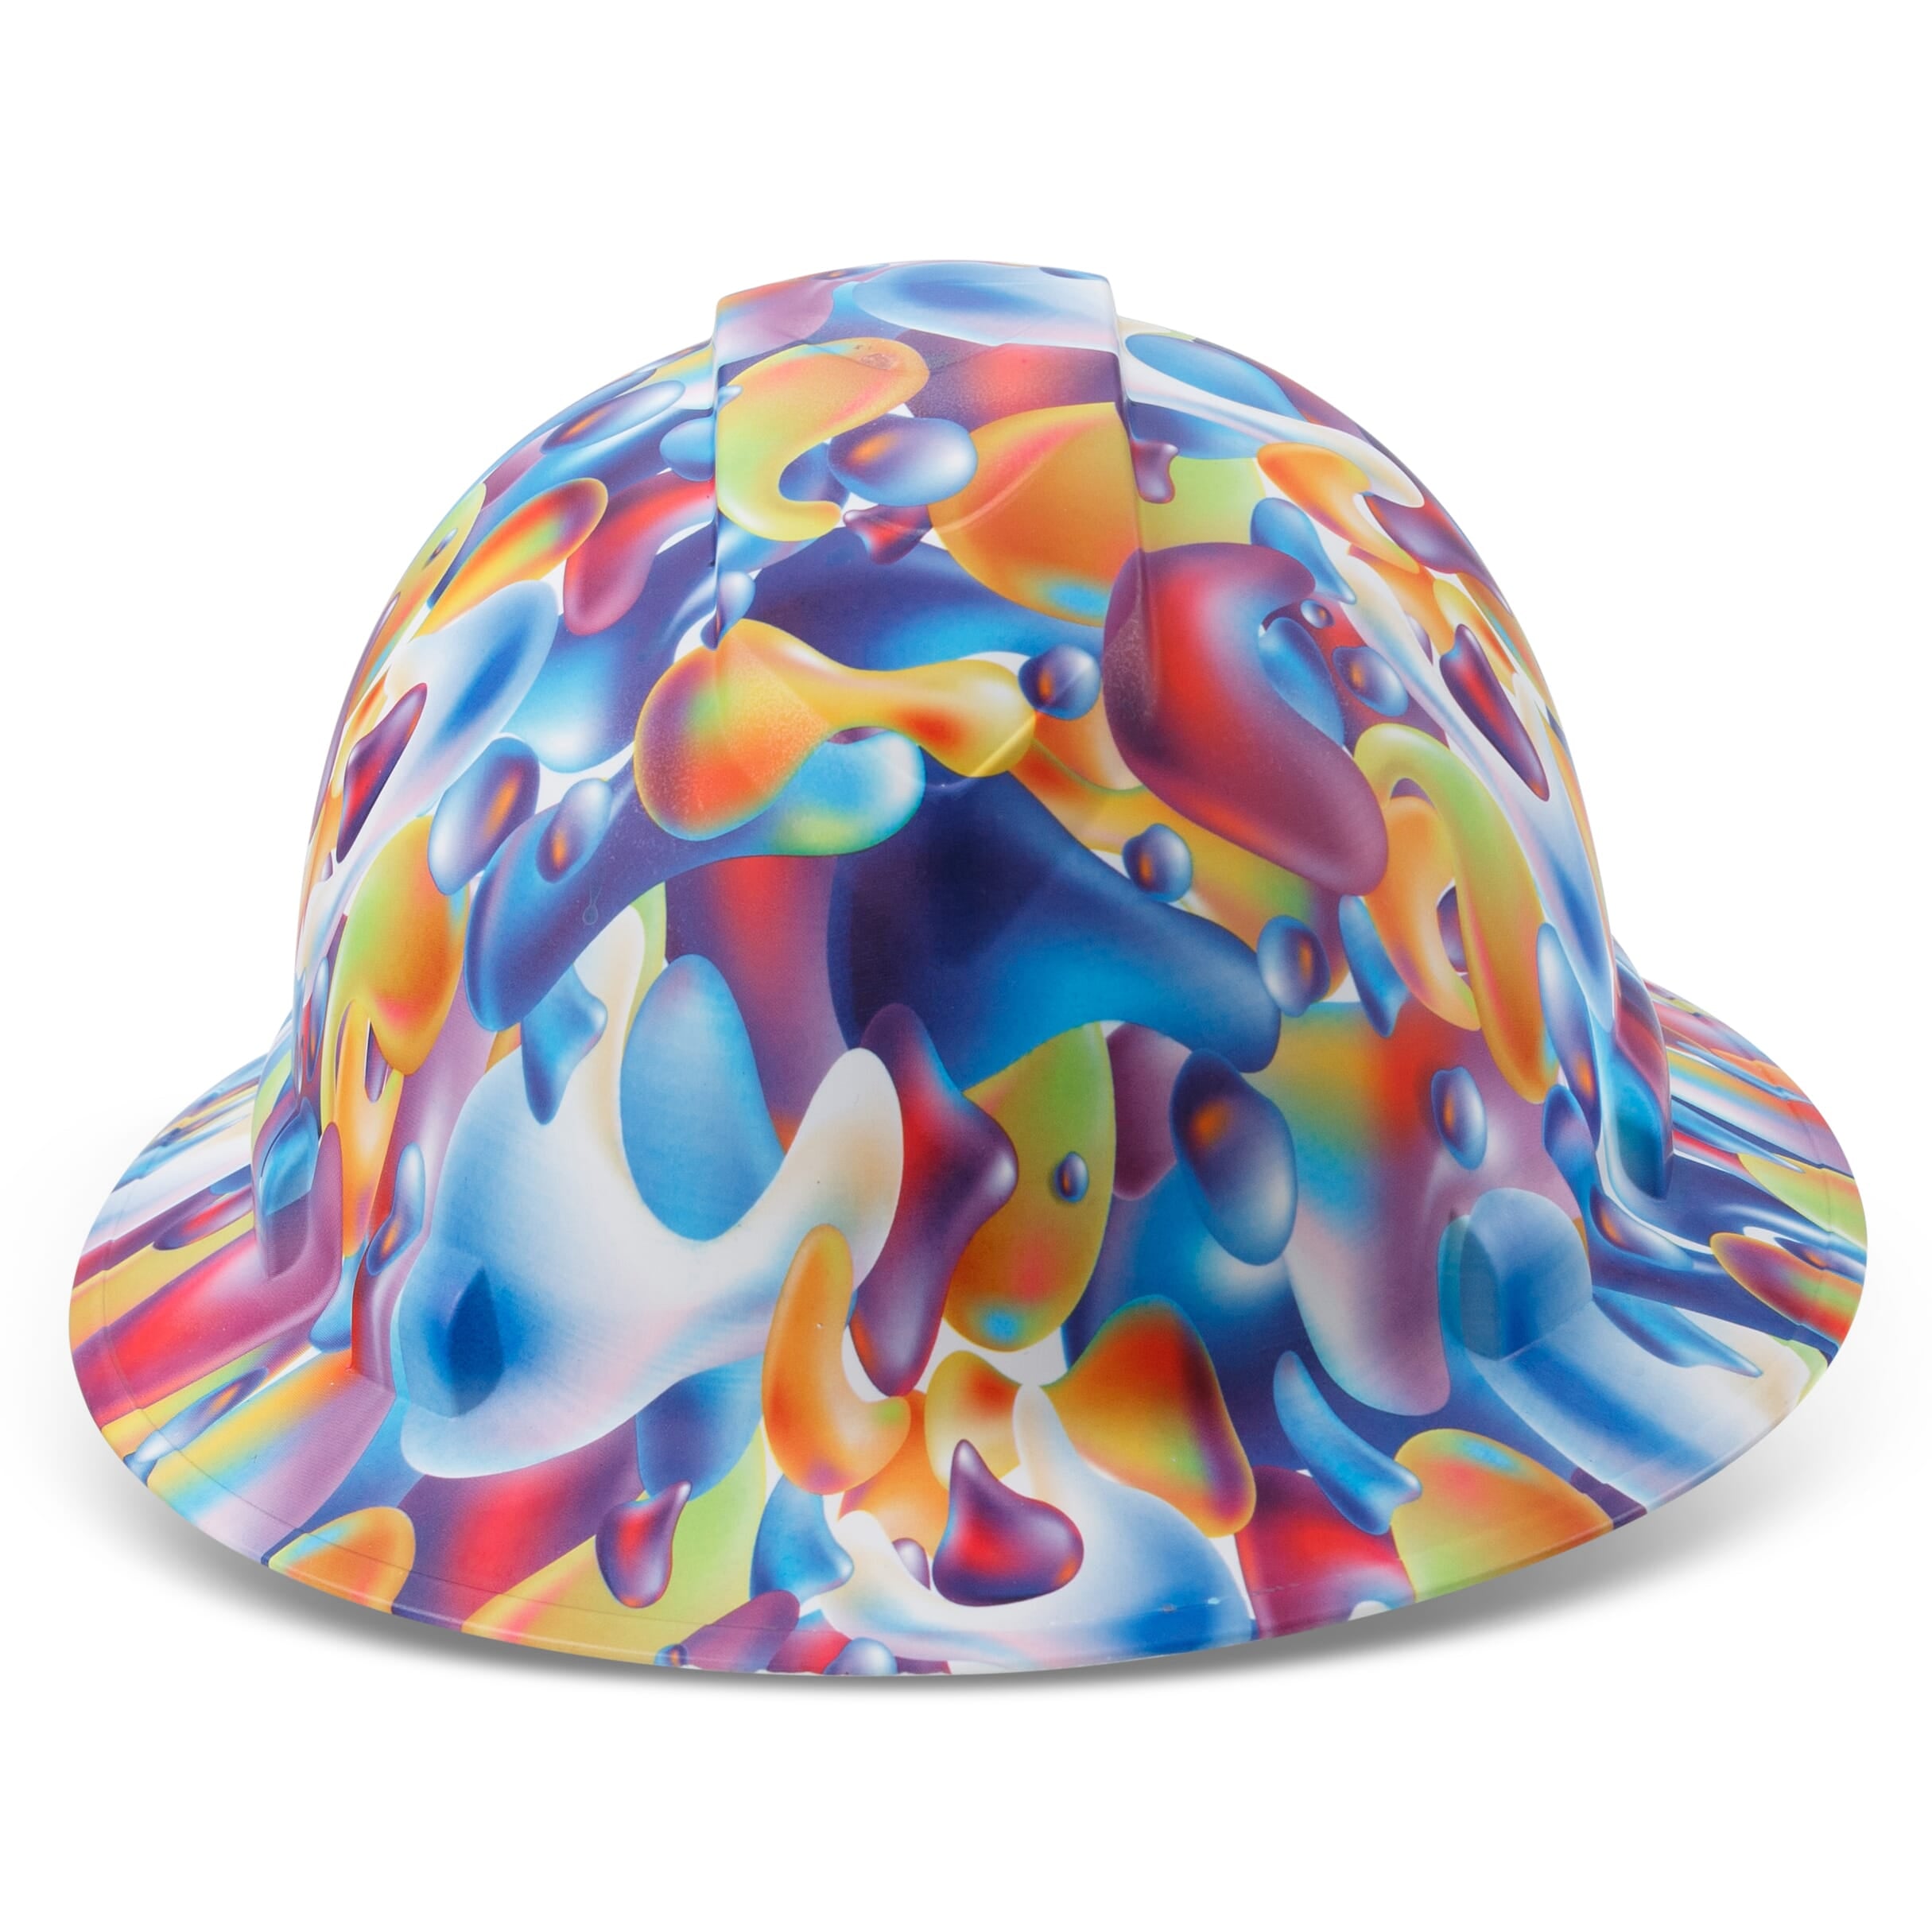 Full Brim Pyramex Hard Hat, Custom Color Bubbles Design, Safety Helmet, 6 Point